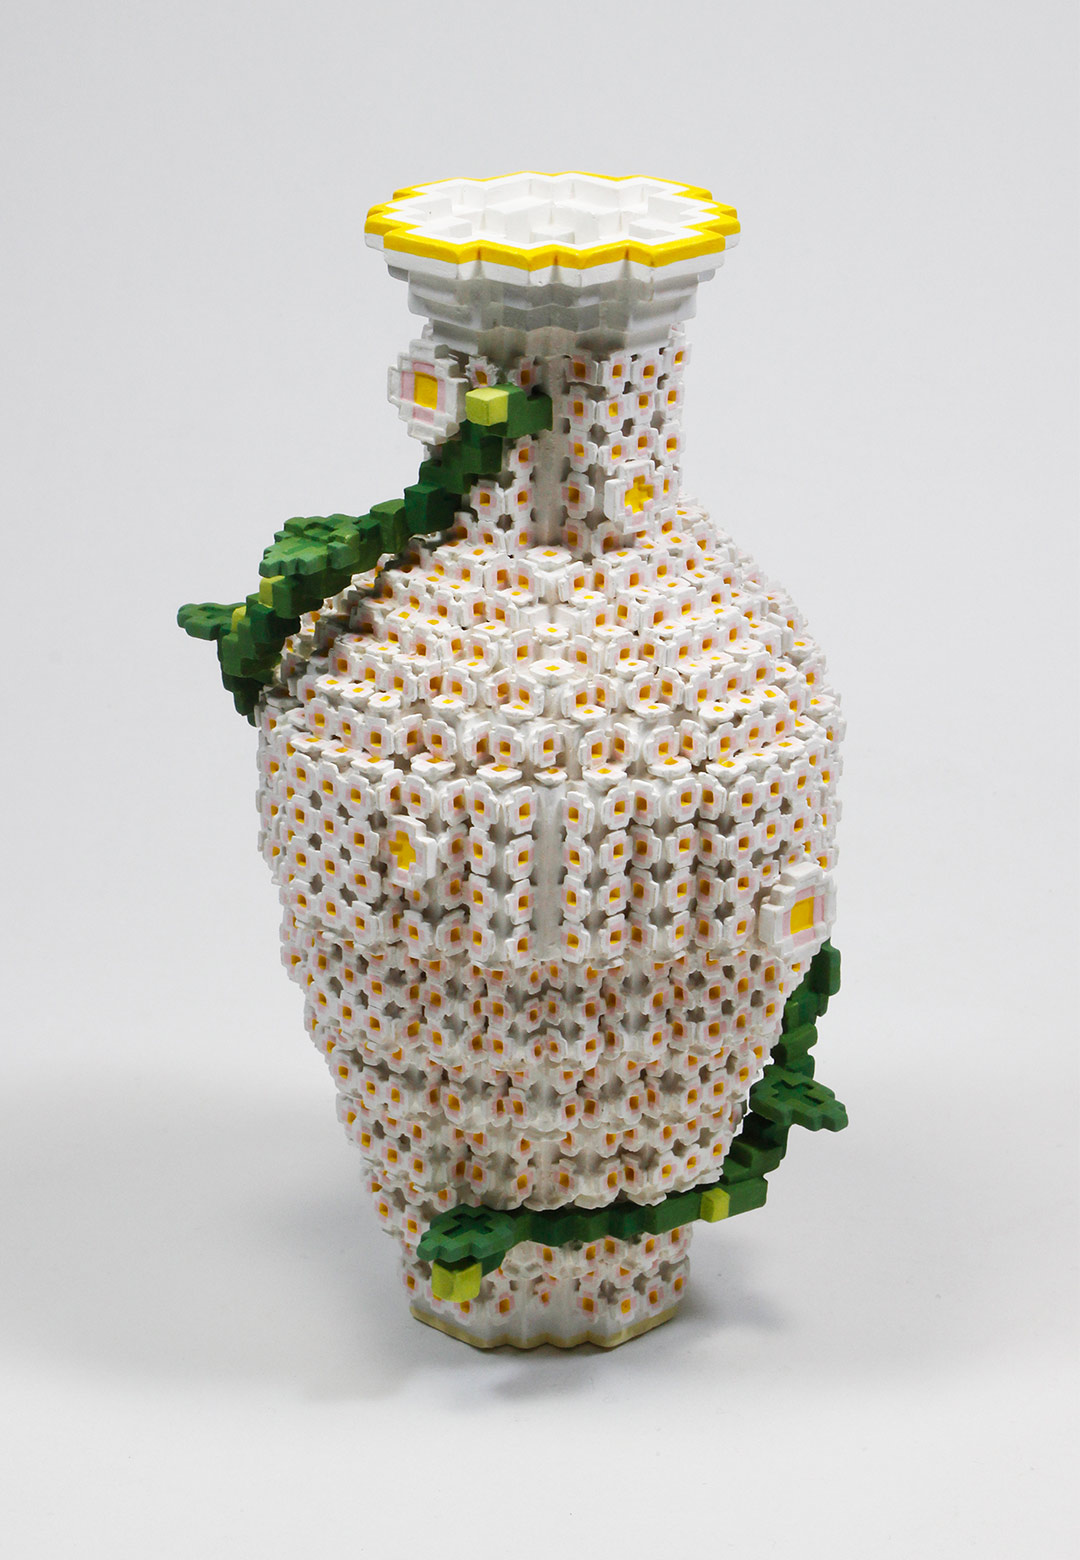 Into the low-resolution, 8-bit ceramic delights of Japanese artist Toshiya Masuda